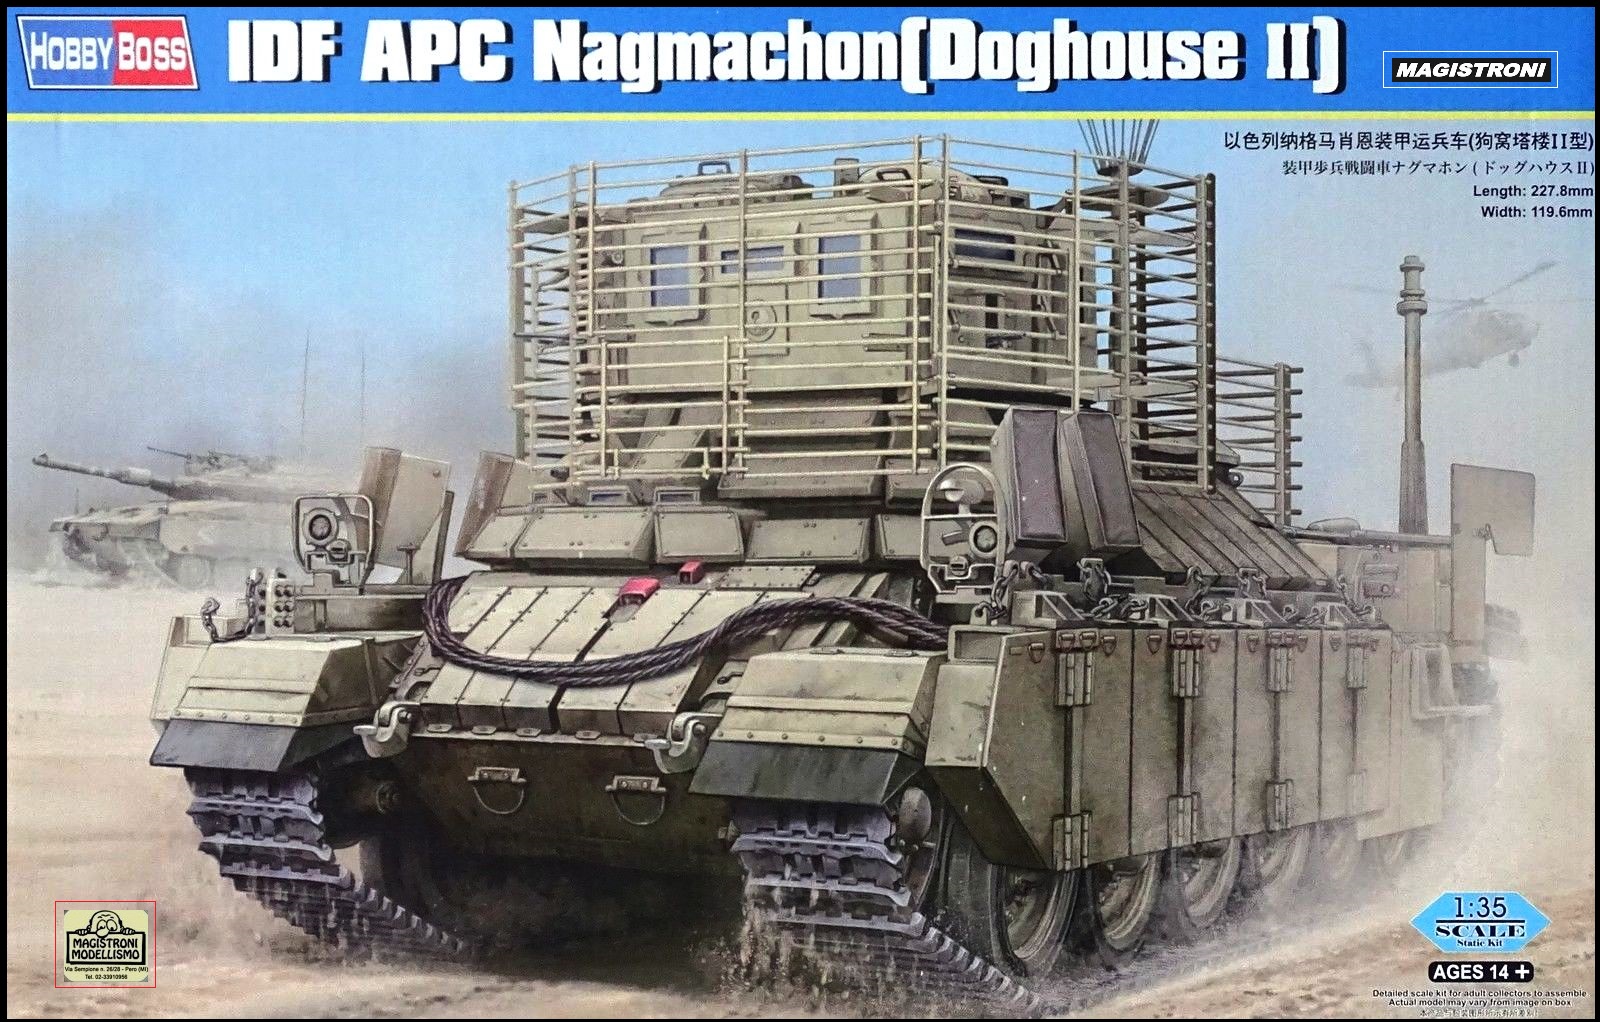 IDF APC NAGMACHON DOGHOSE II